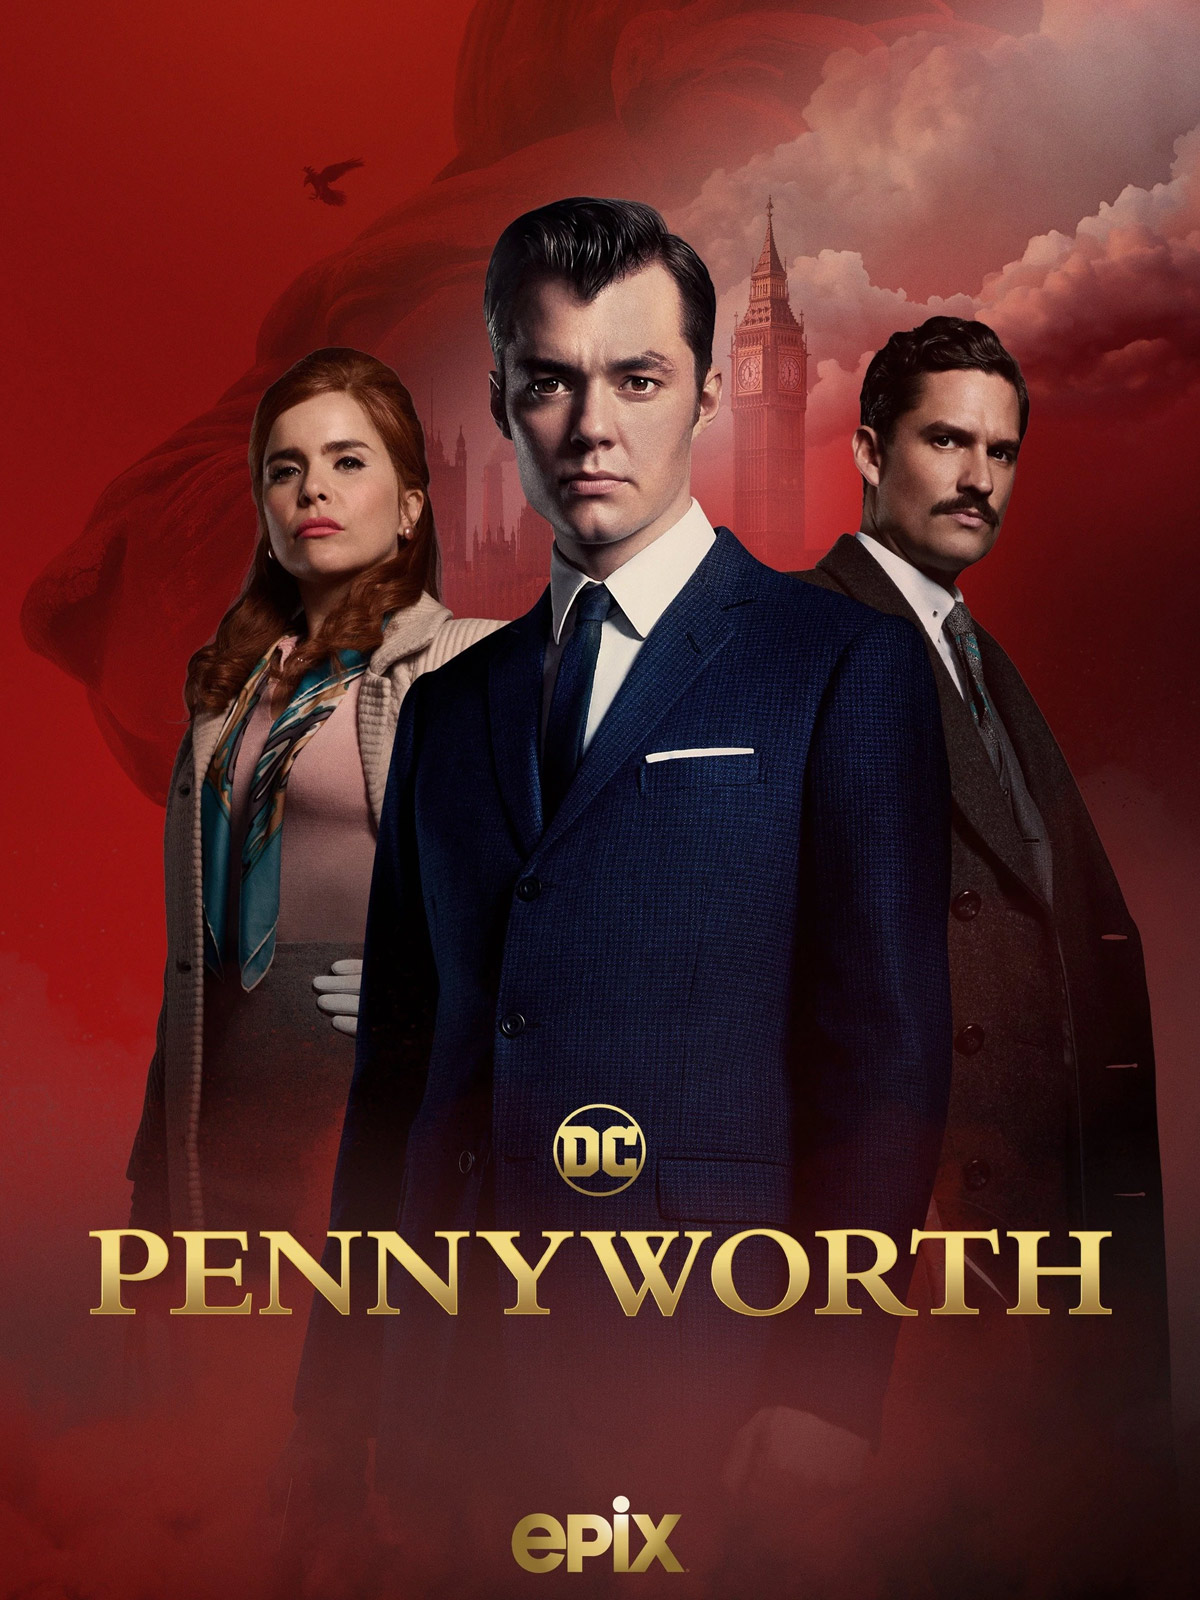 Pennyworth movie poster.